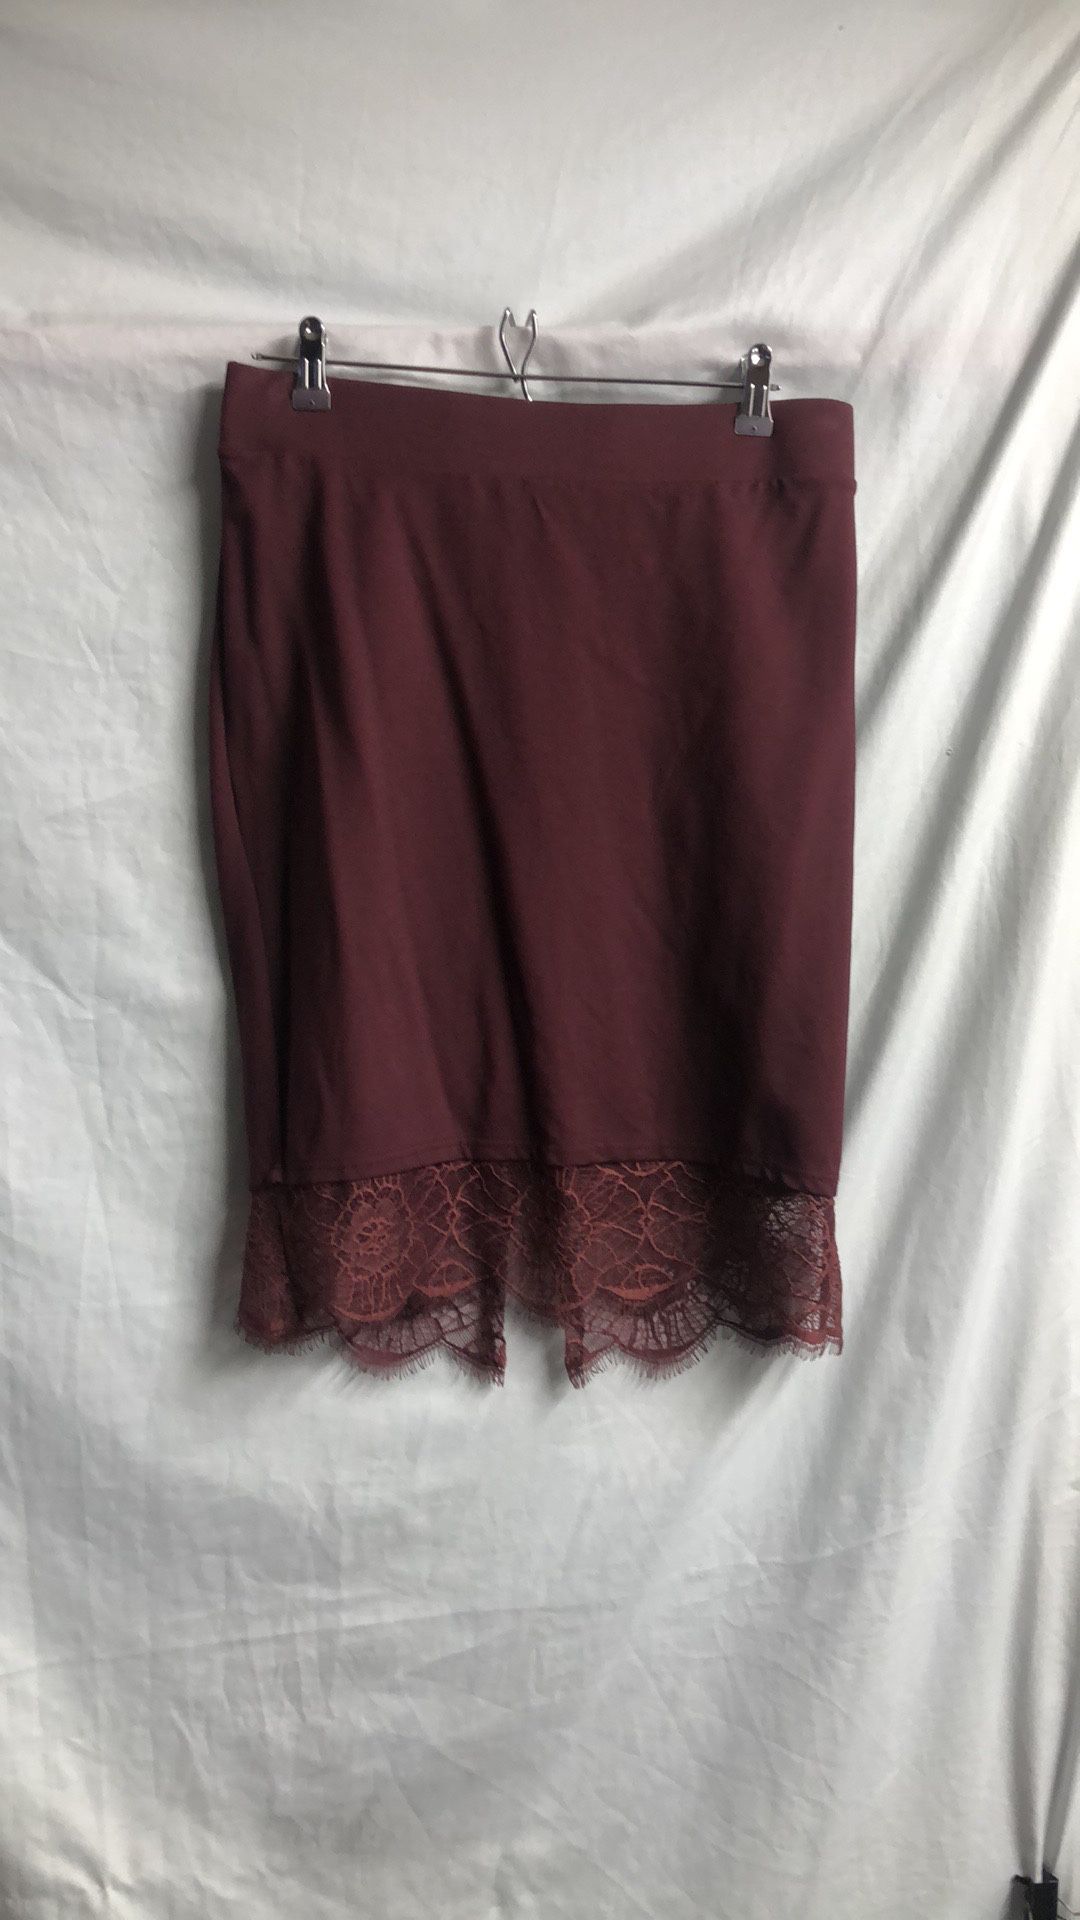 Nwot Gorgeous Ponte Knit Torrid burgundy lace pencil skirt 